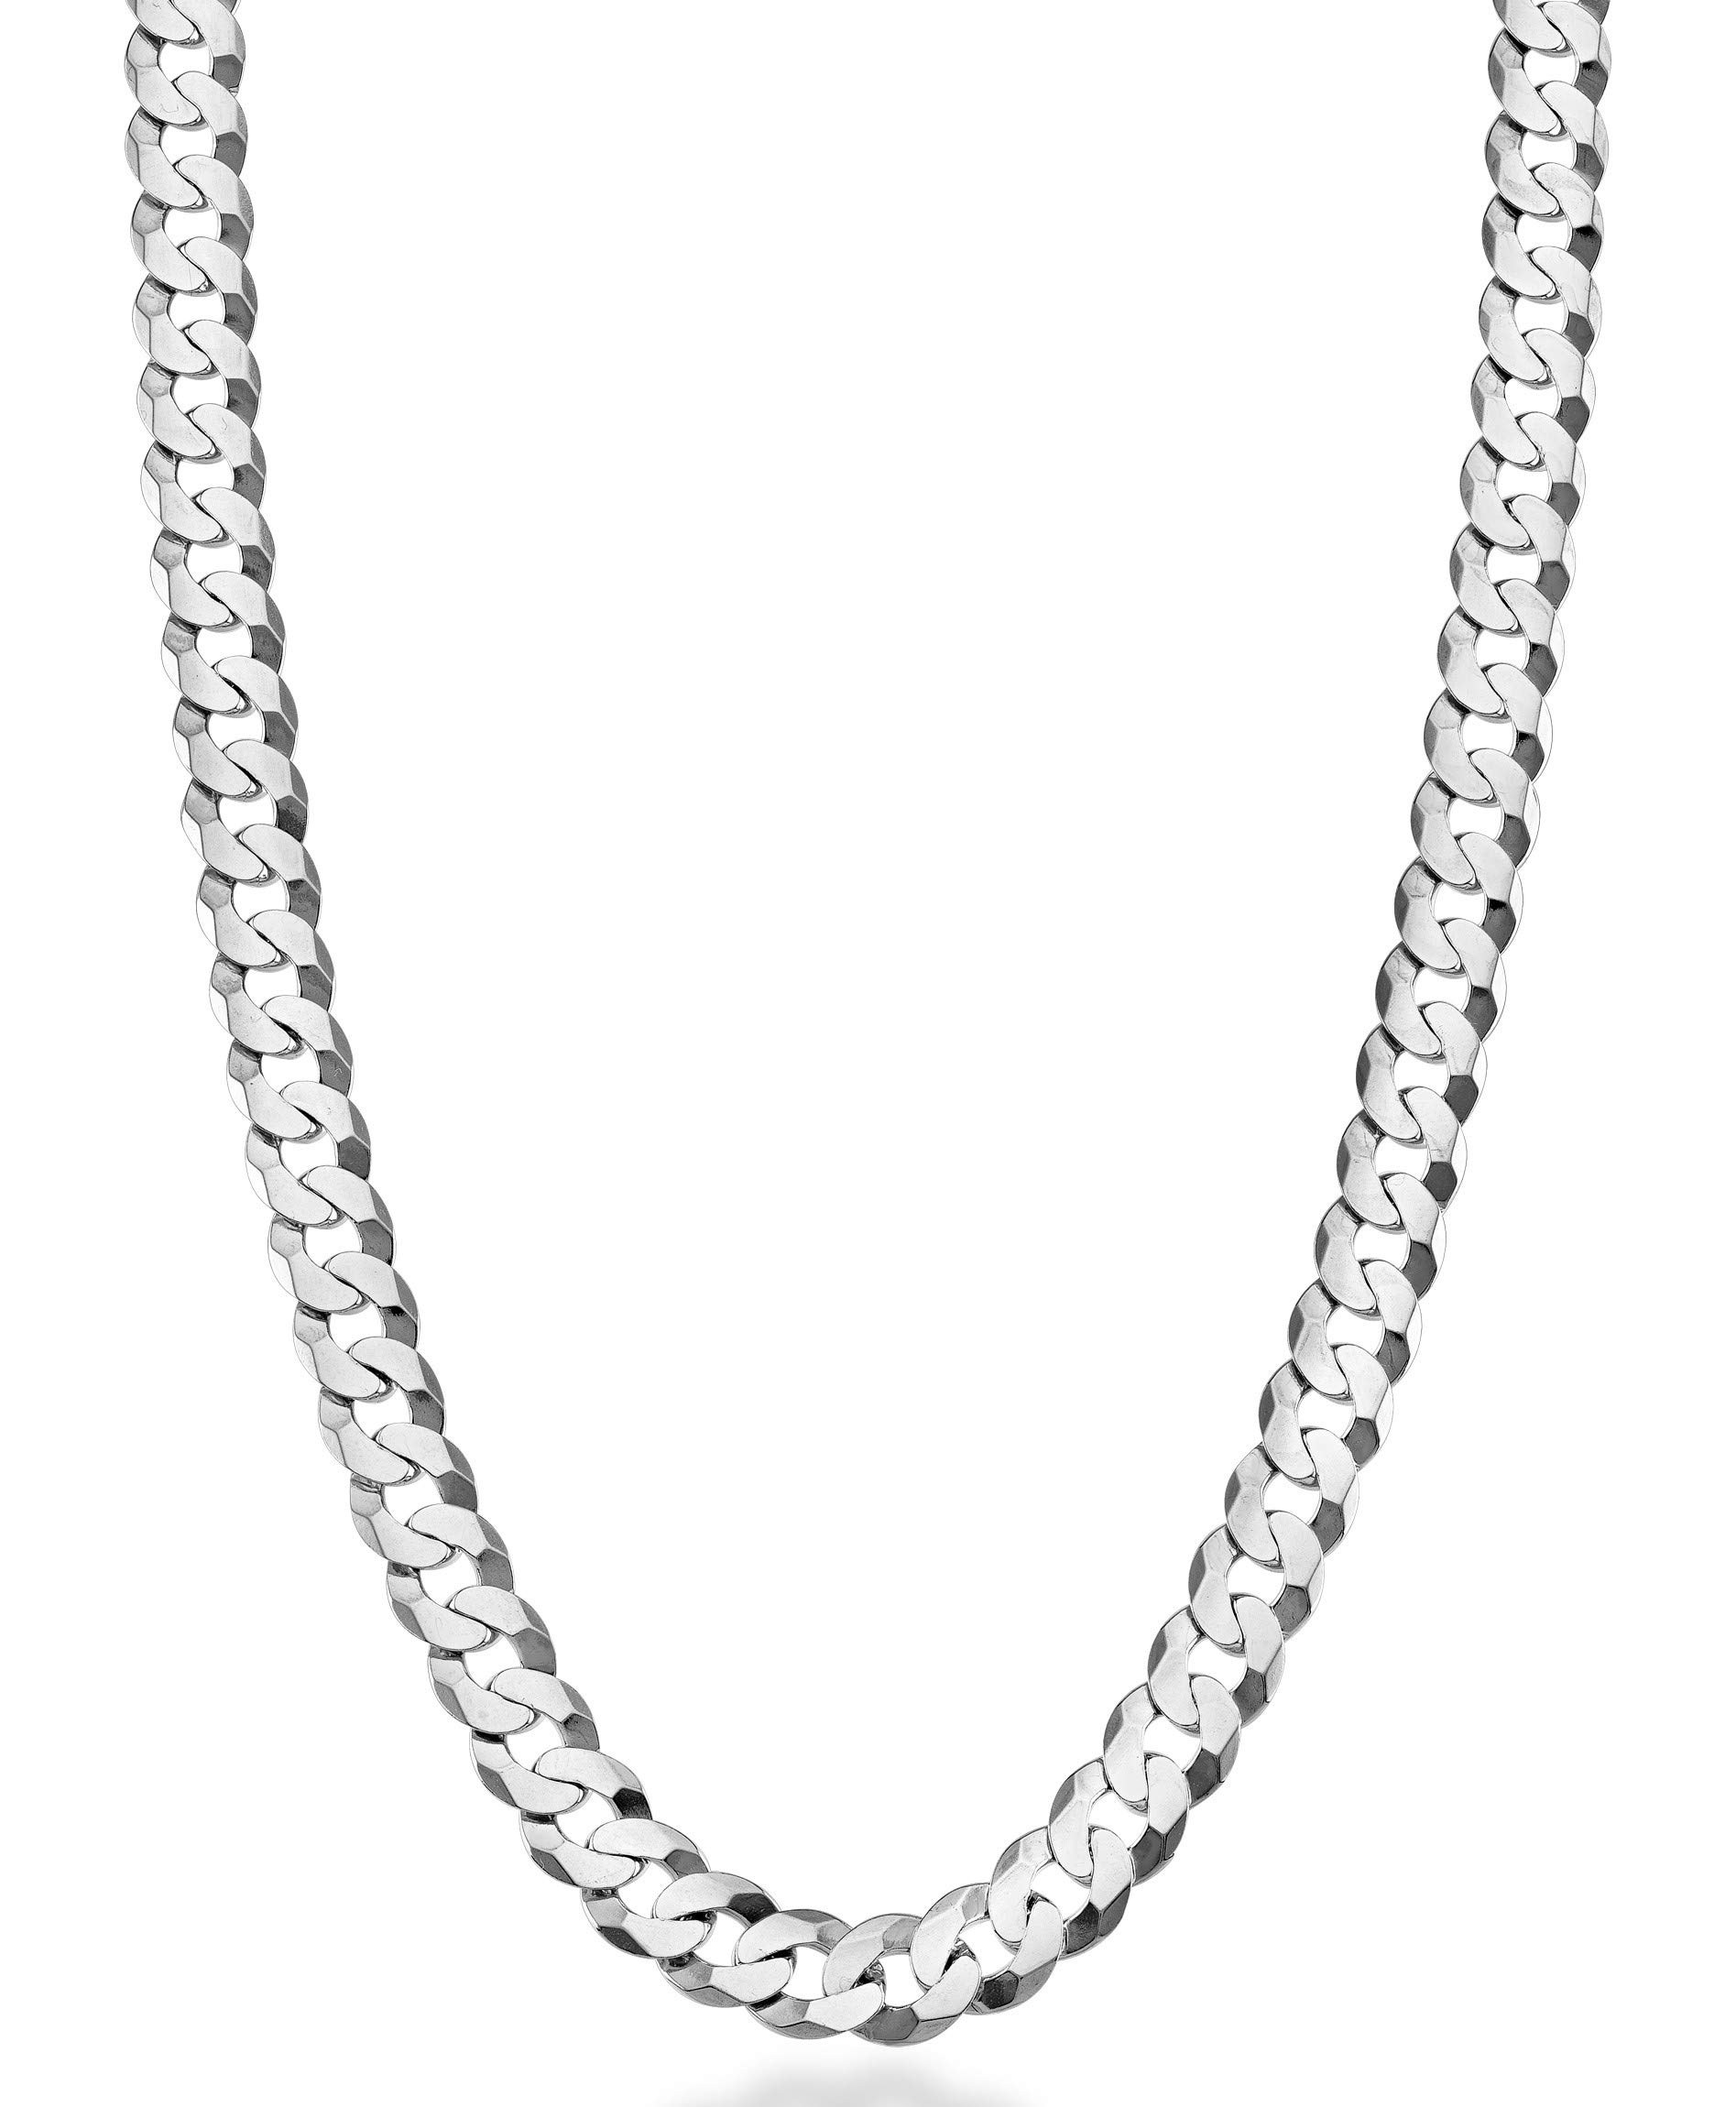 Miabella Solid 925 Sterling Silver Italian 7mm Diamond Cut Cuban Link Curb Chain Necklace for Men Women